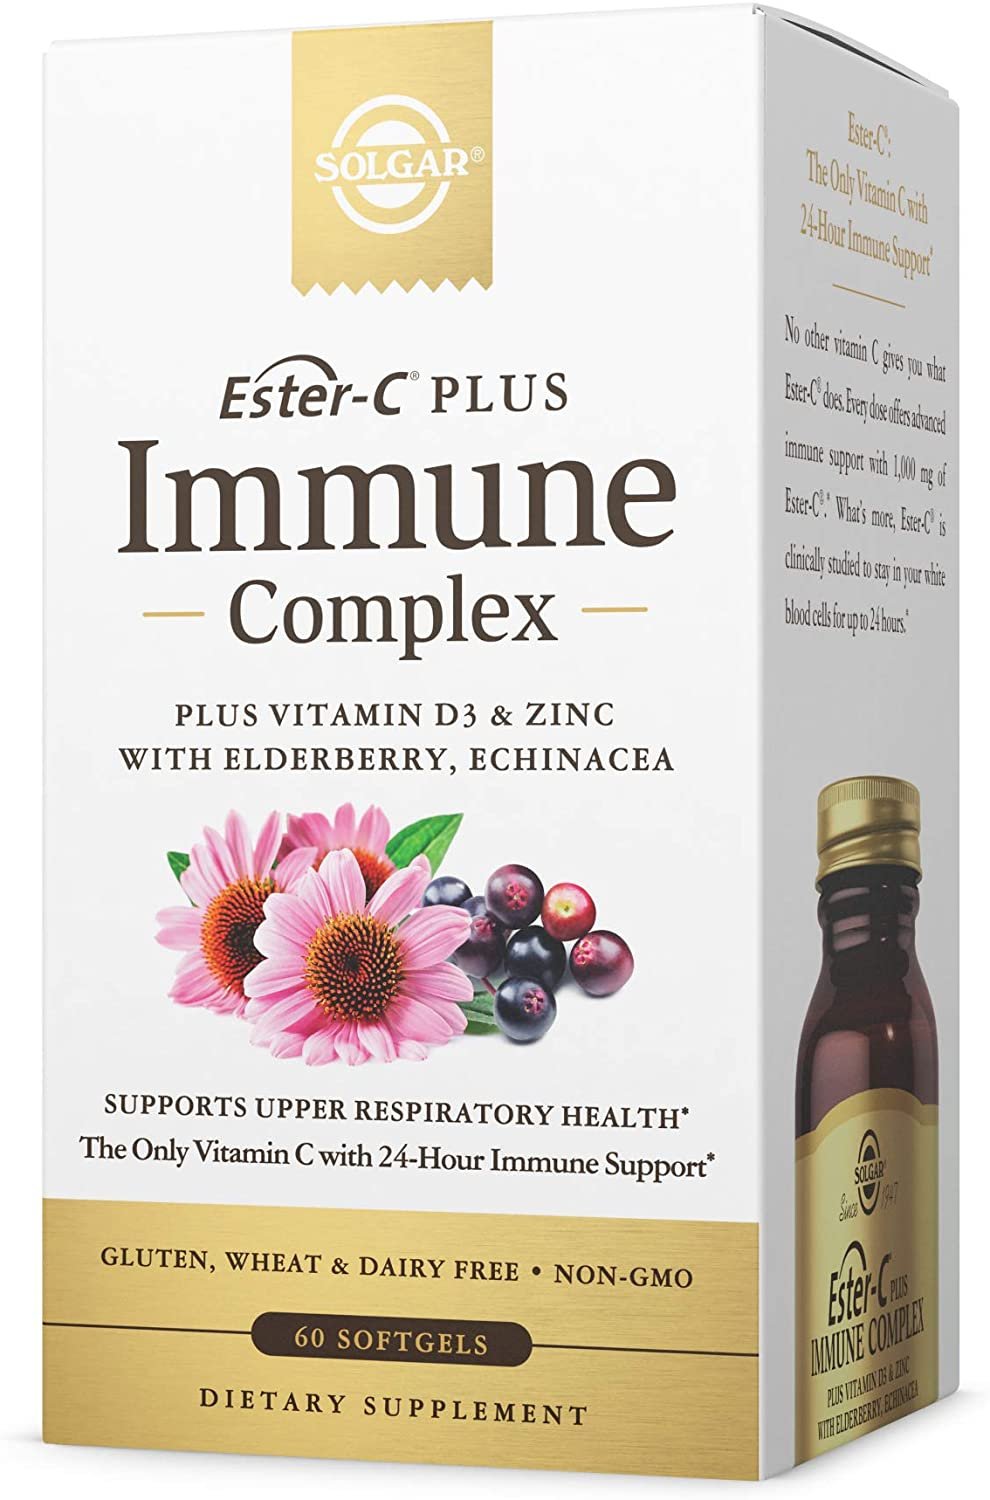 Solgar Ester-C Plus Immune Complex, 60 Softgels - 24-Hour Immune Support - Supports Upper Respiratory Health - Plus D3, Zinc, Elderberry & Echinacea - Non-GMO, Gluten Free, Dairy Free - 30 Servings